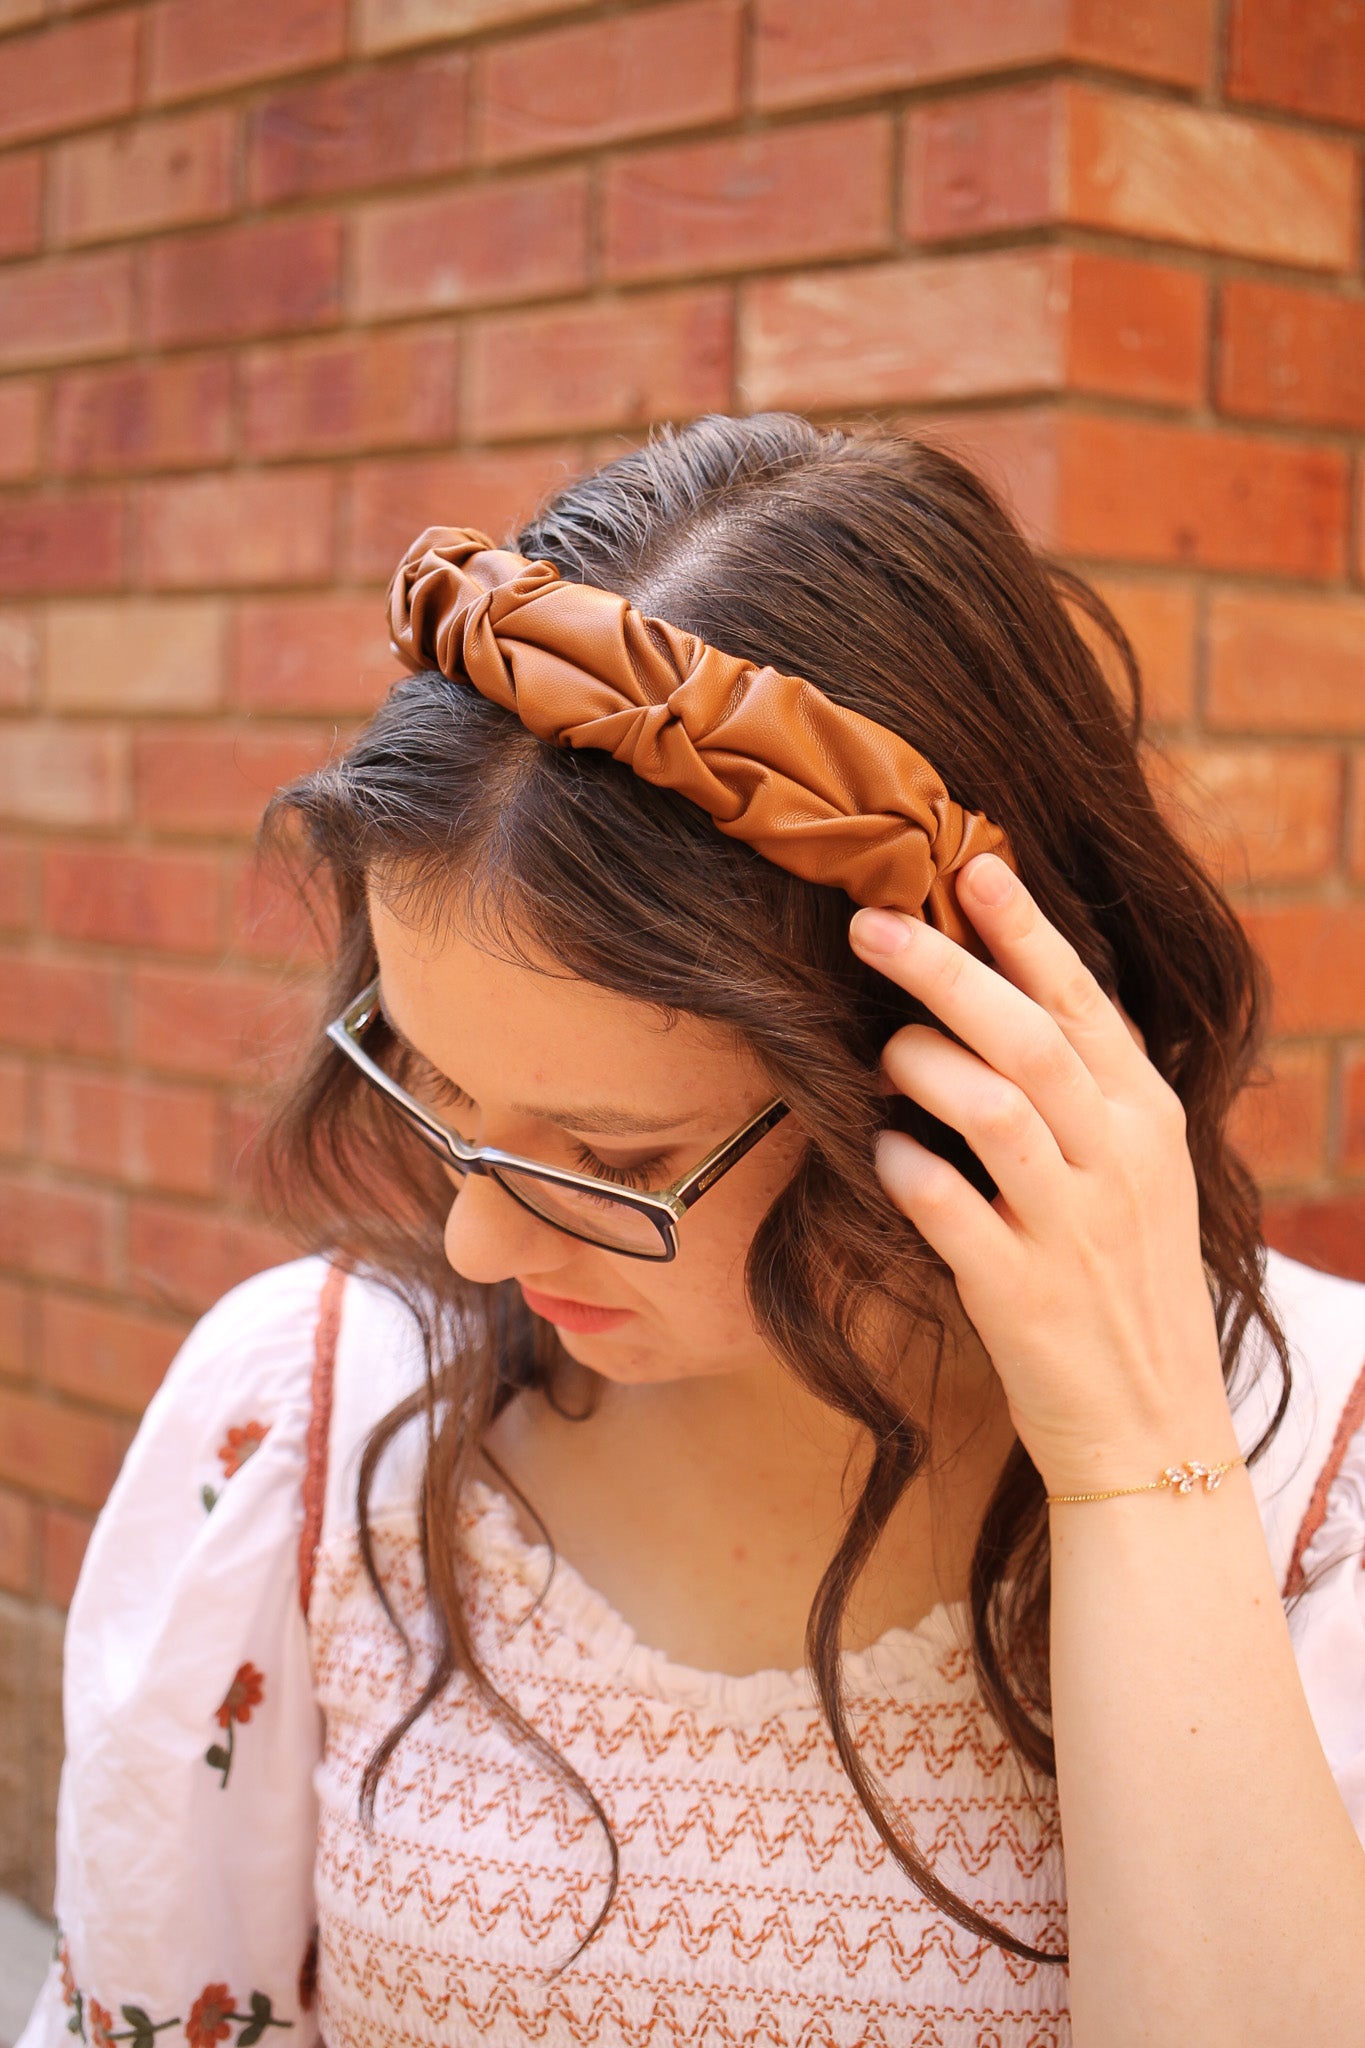 Heather Headband in Brown Leather